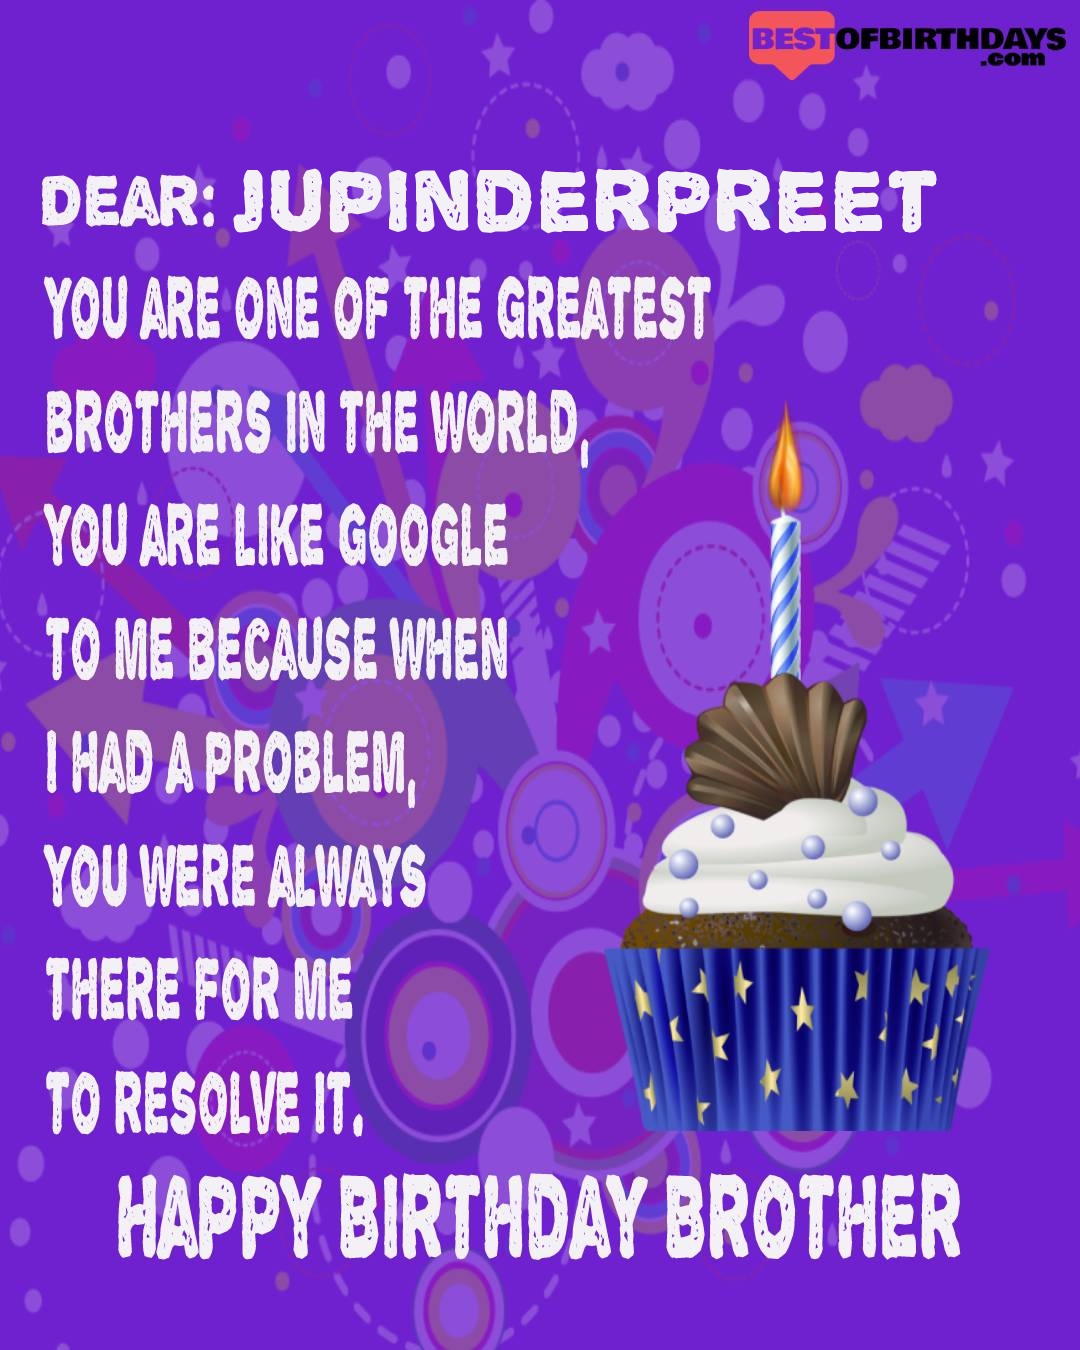 Happy birthday jupinderpreet bhai brother bro